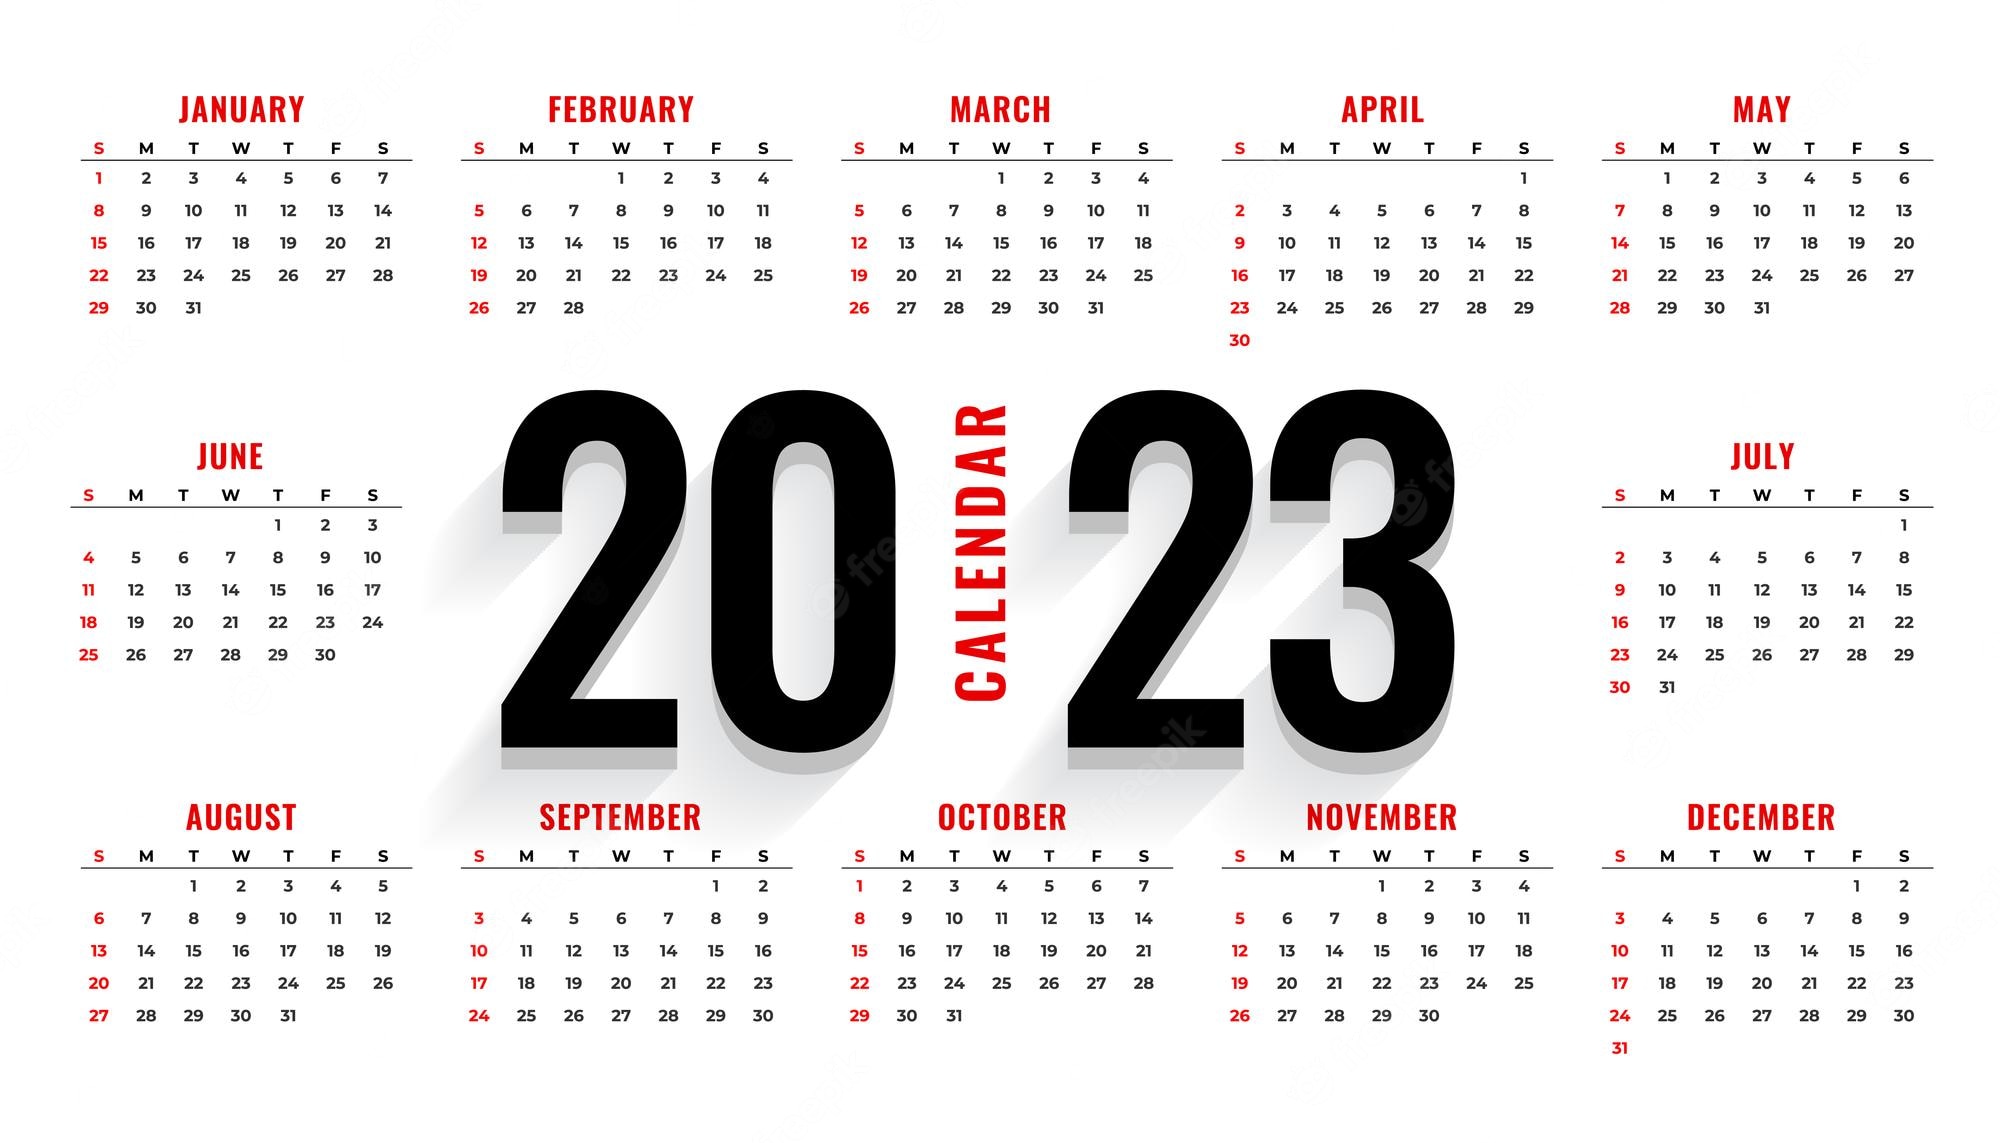 2023 Calendar Template